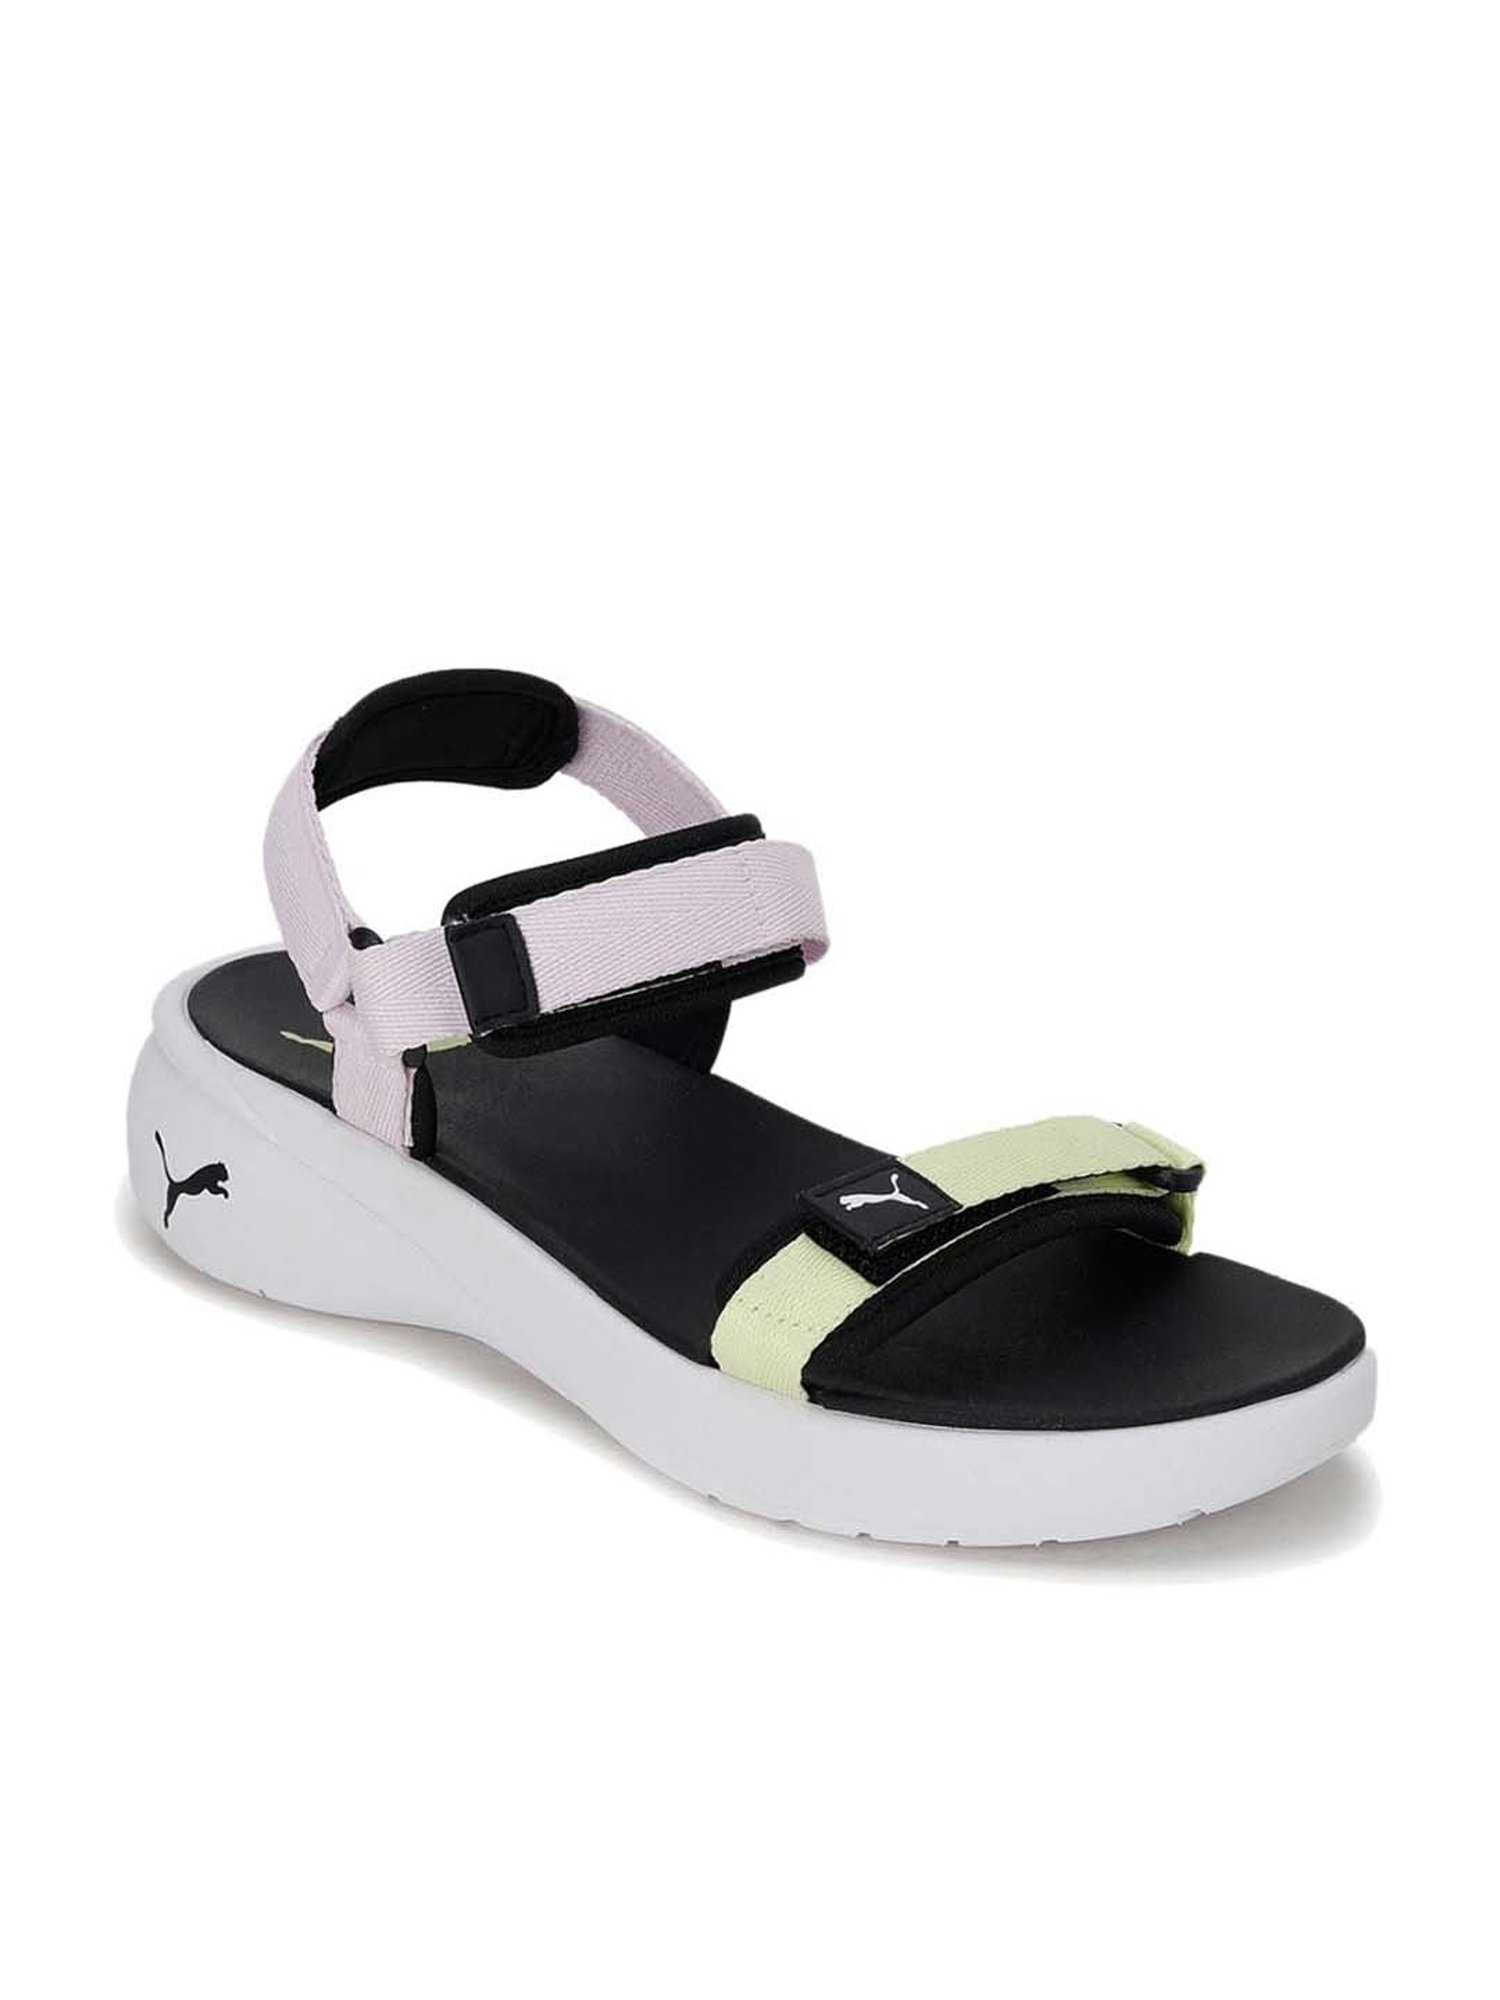 Buy PUMA Stark one8 IDP Men's Sandals [368519] White 9 Online - Best Price  PUMA Stark one8 IDP Men's Sandals [368519] White 9 - Justdial Shop Online.